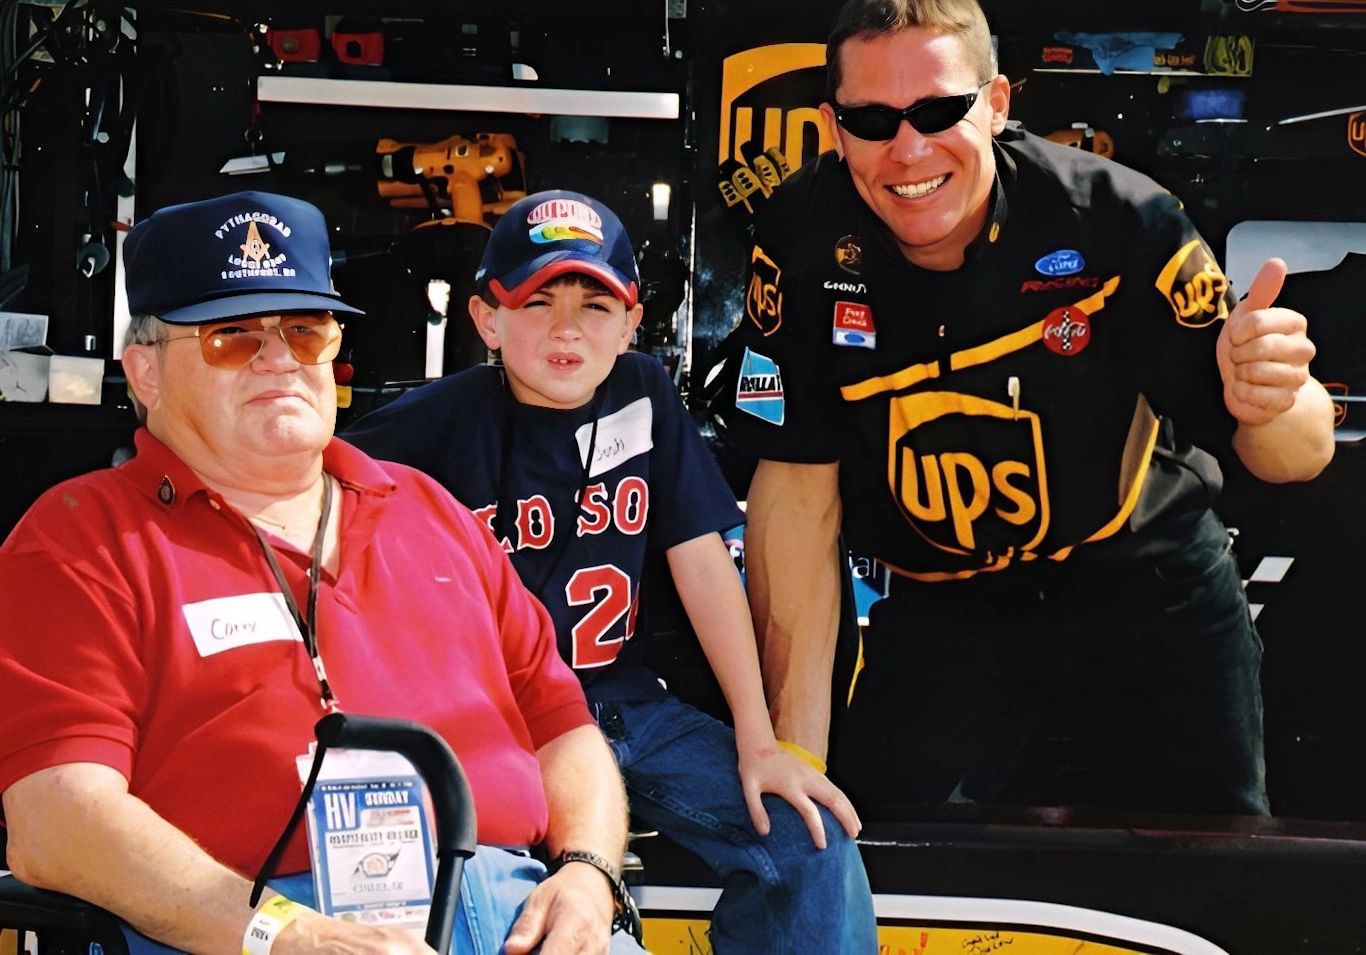 Josh and Dad NASCAR Talladega UPS car.